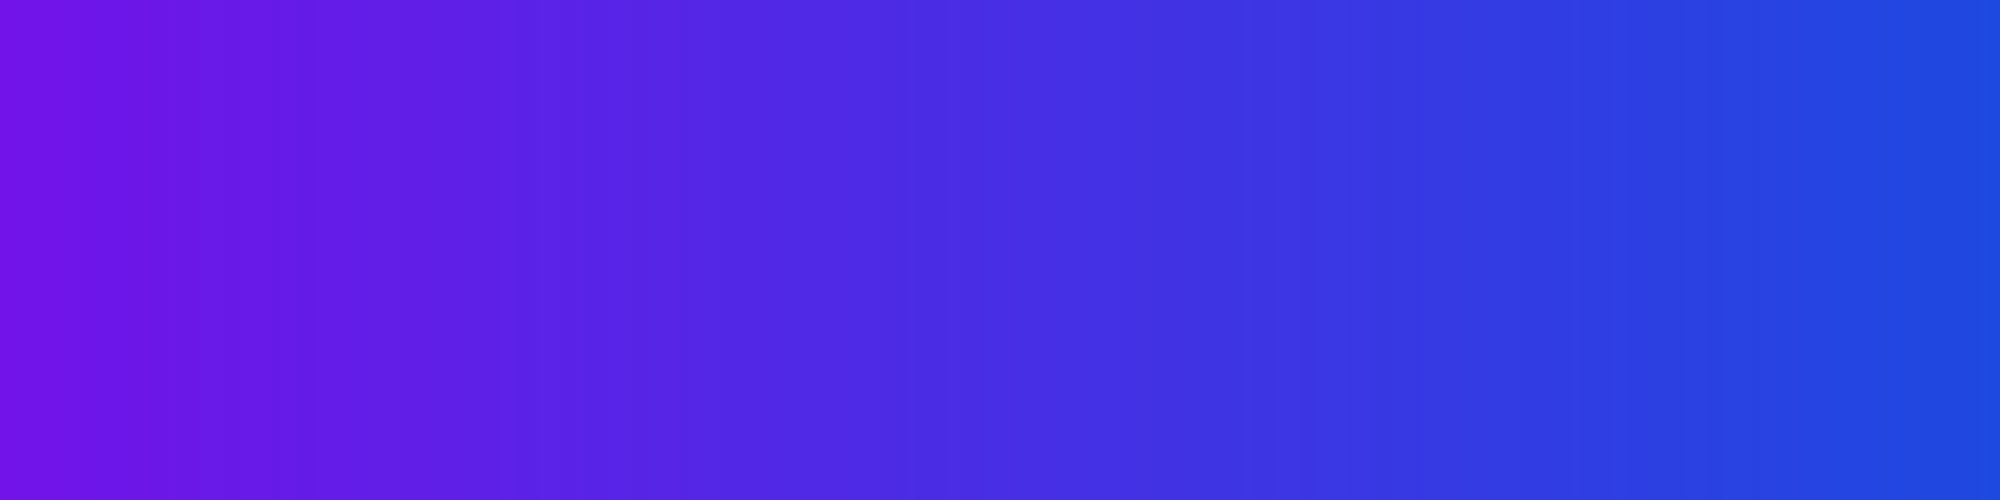 purple-blue gradient banner